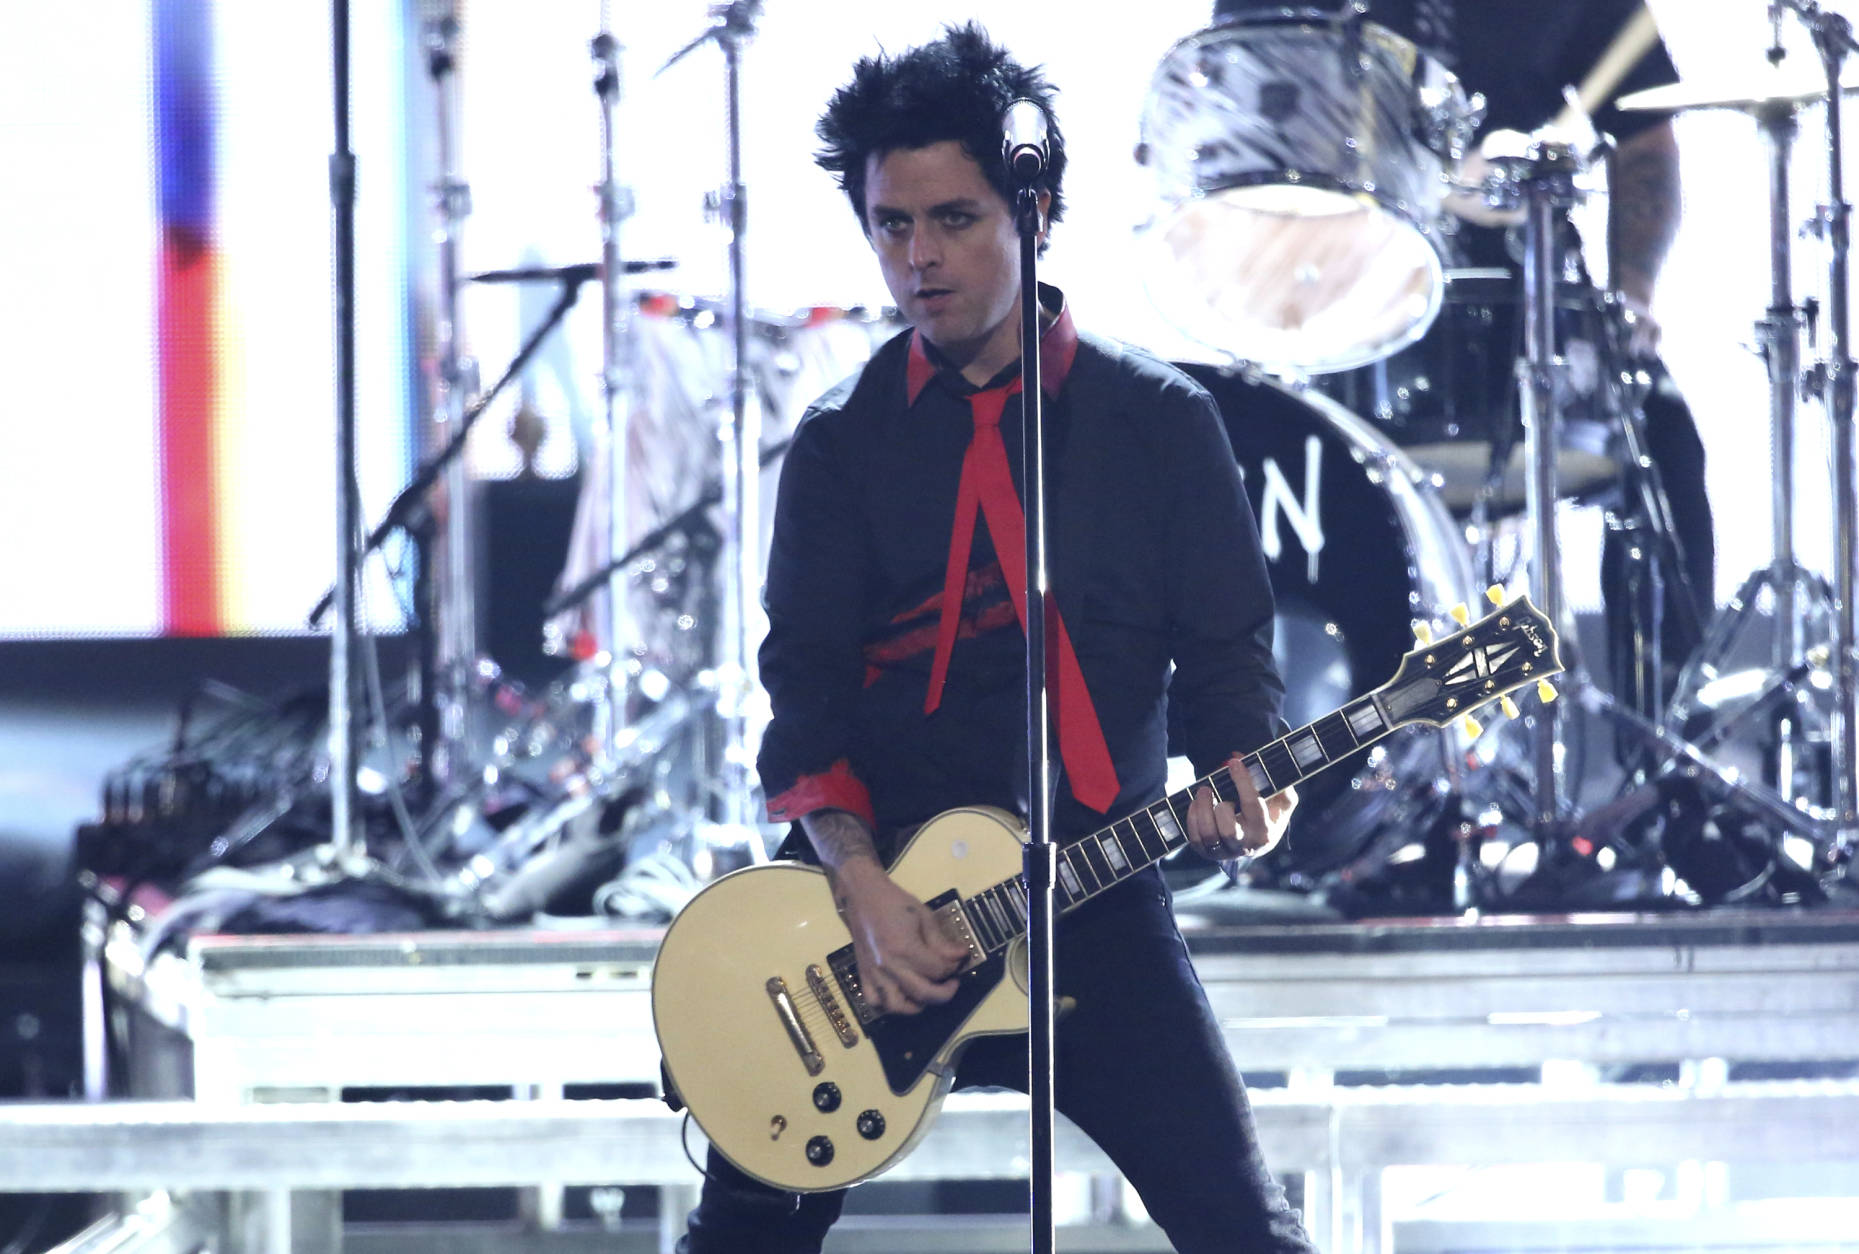 Billie Joe Armstrong, of Green Day, performs "Bang Bang" at the American Music Awards at the Microsoft Theater on Sunday, Nov. 20, 2016, in Los Angeles. (Photo by Matt Sayles/Invision/AP)